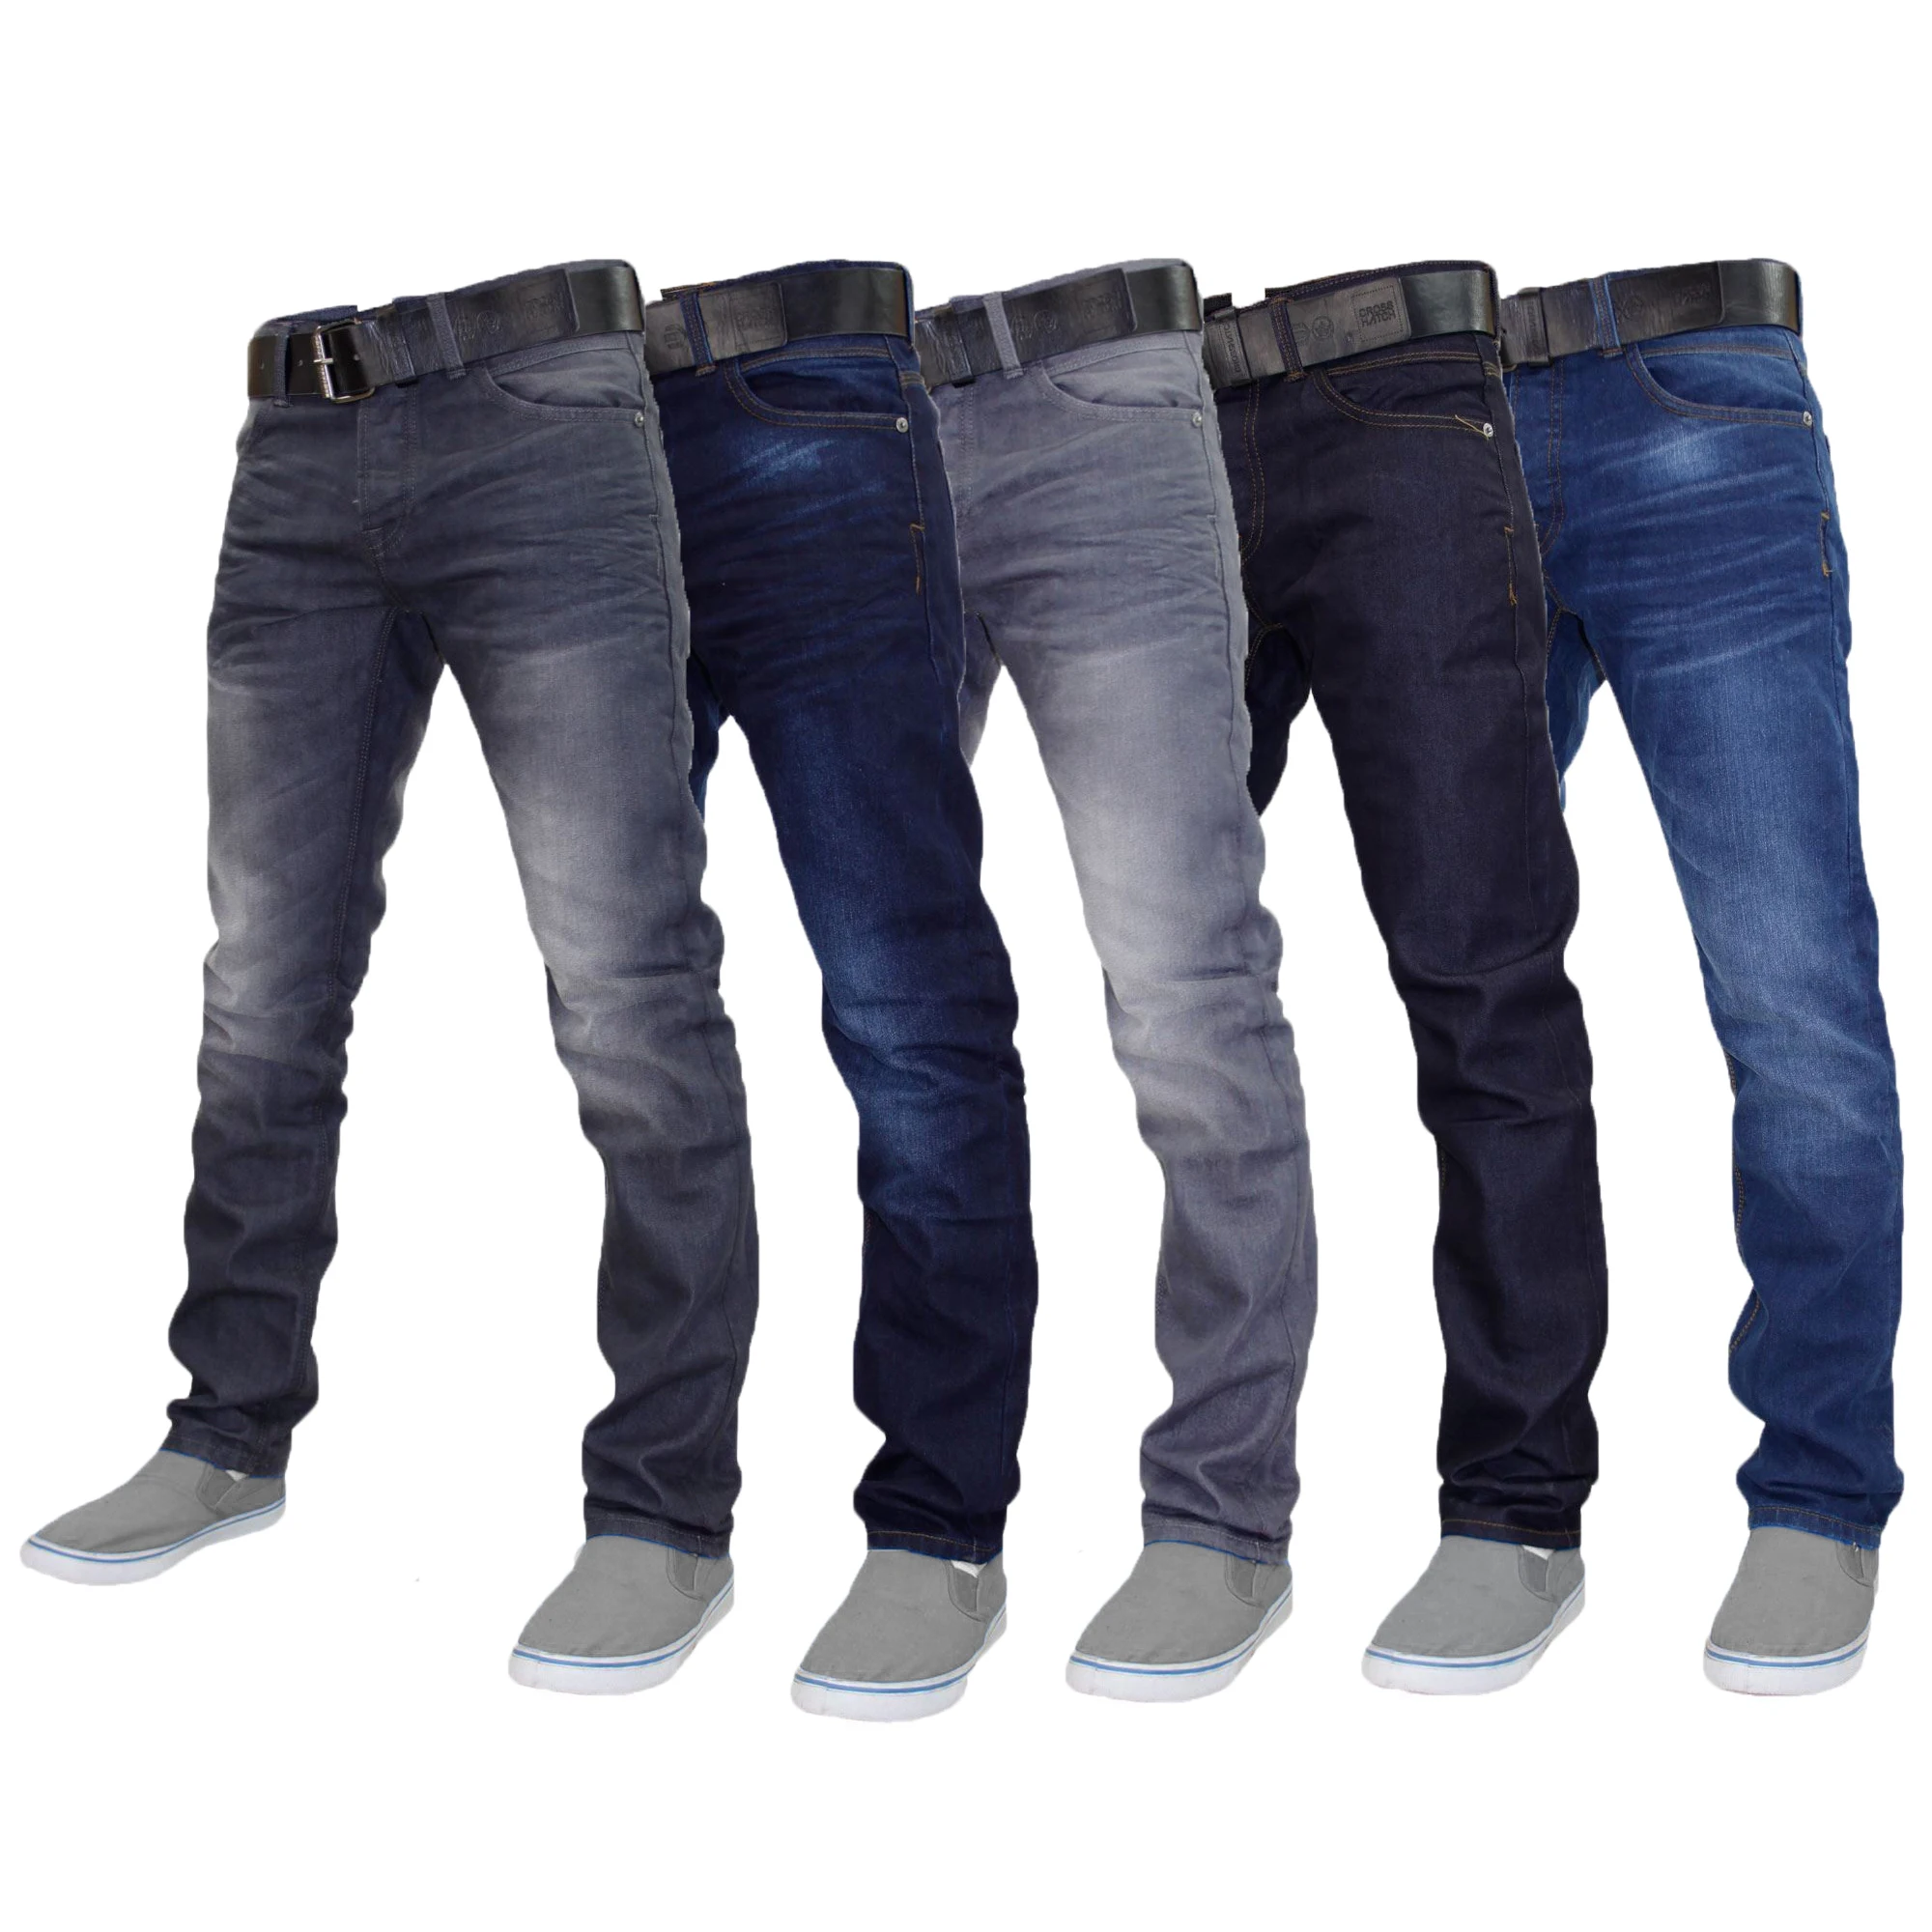 Stock lot/Surplus Apparels Branded Labels Men's Boy's Denim Pant Super Low Price